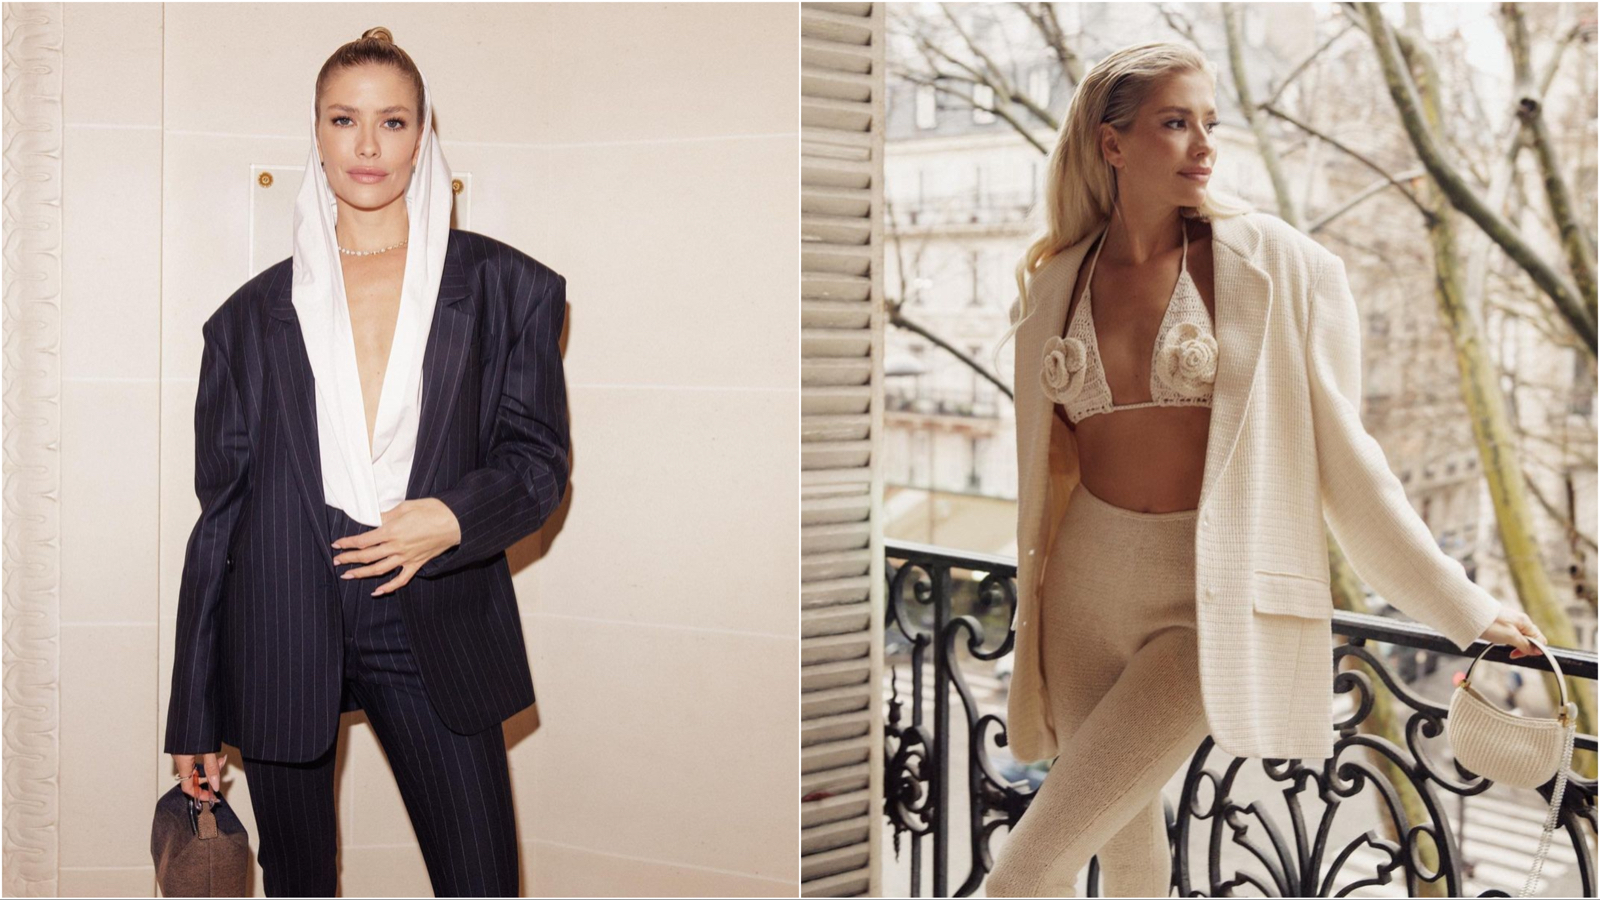 Style Crush of the Week: Lena Perminova